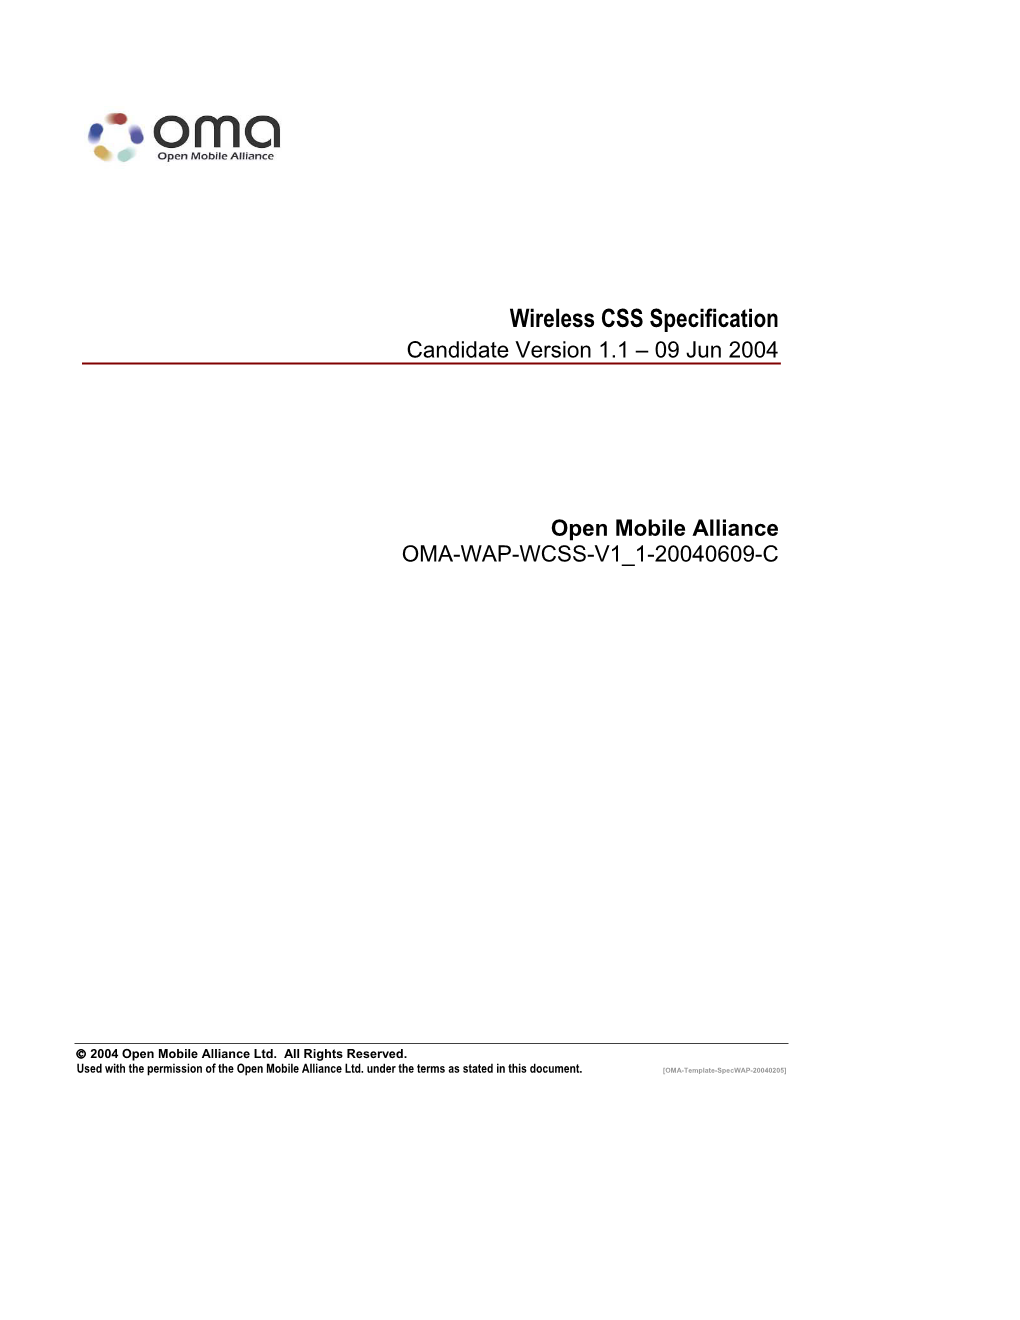 Wireless CSS Specification Candidate Version 1.1 – 09 Jun 2004